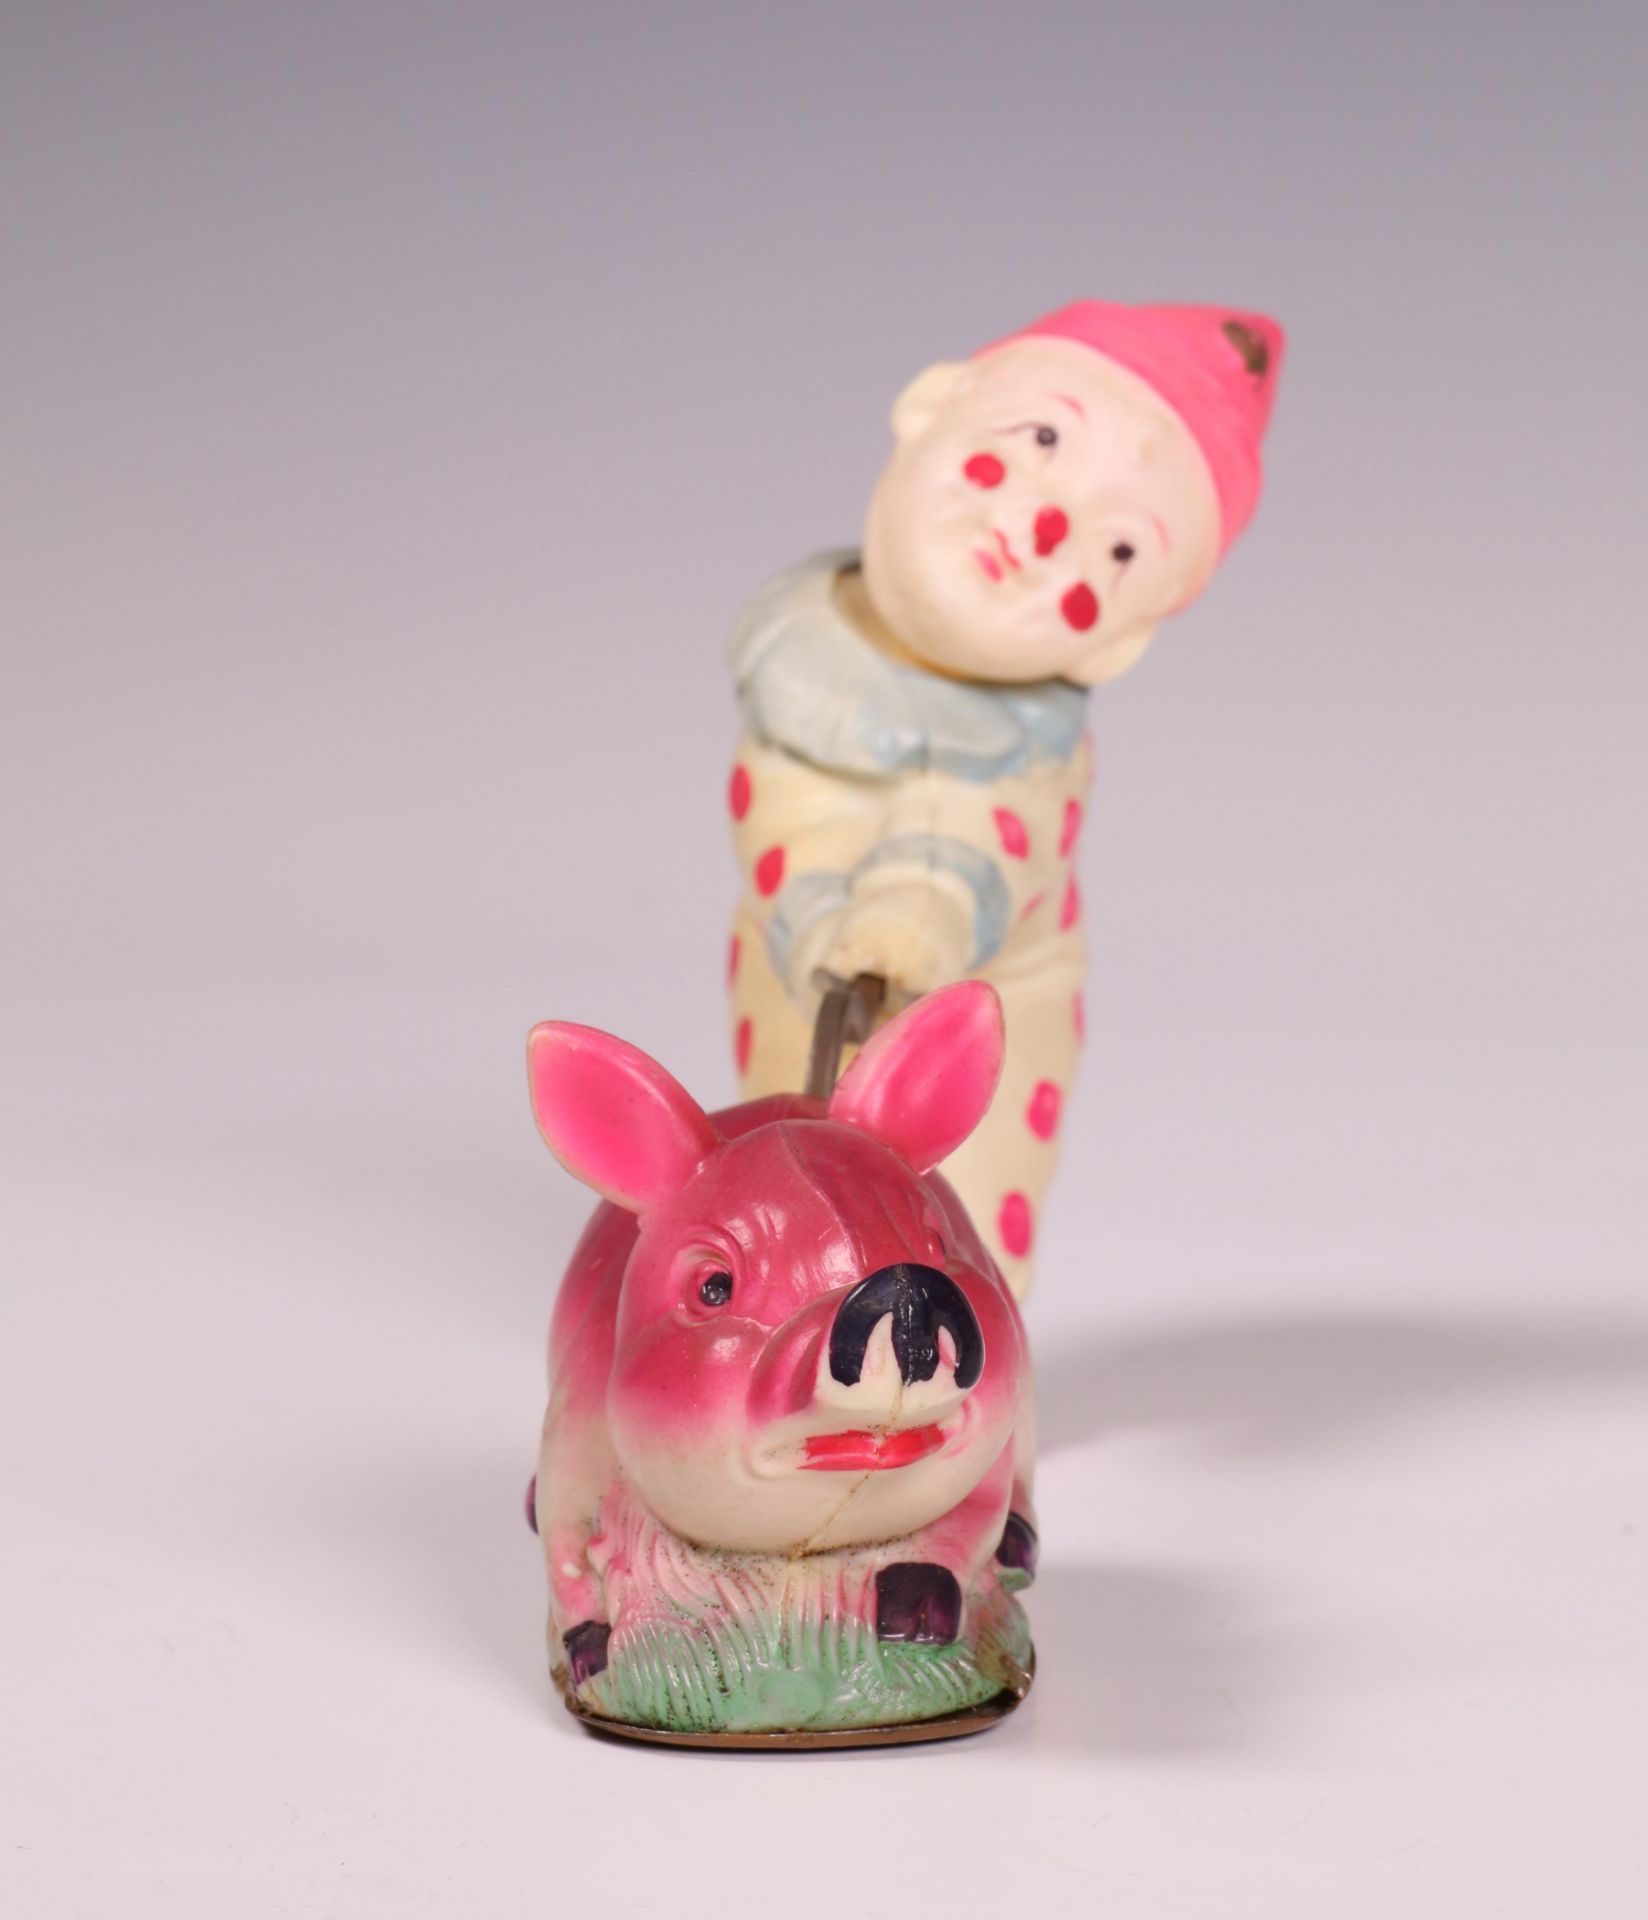 Japan, vier stuks celluloid speelgoed, ca. 1940-1950. - Image 11 of 19